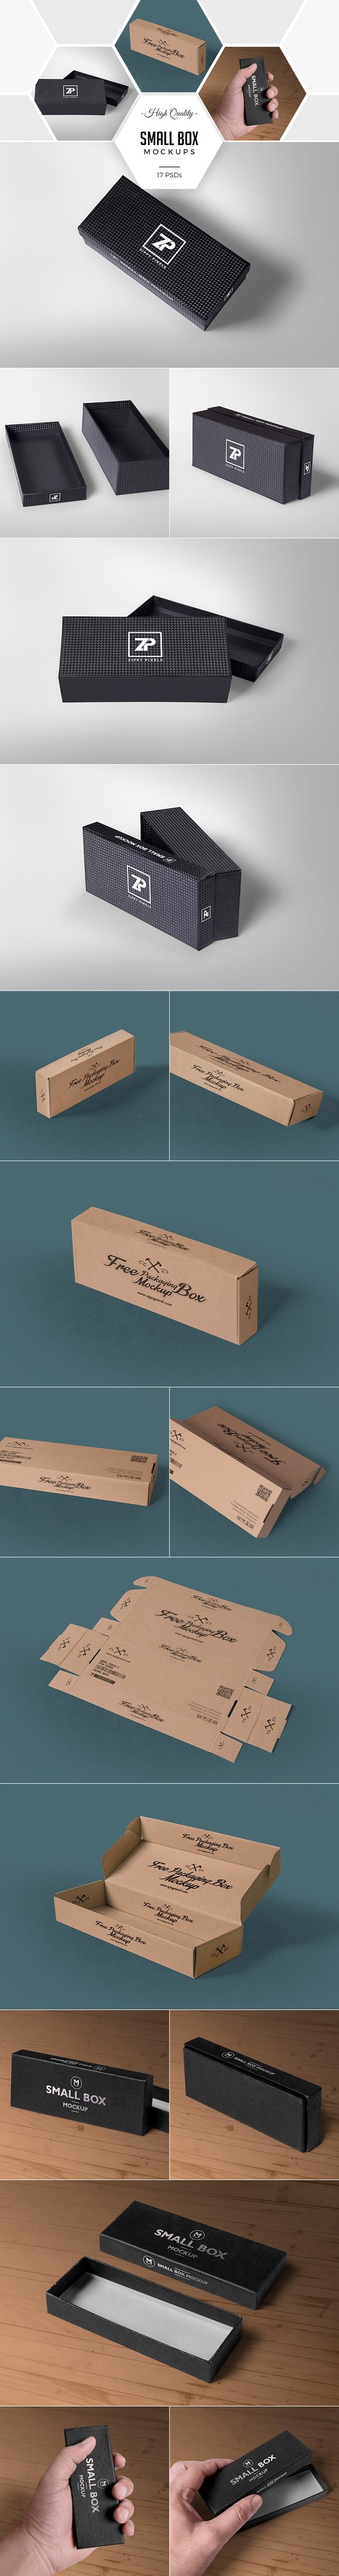 79 Amazing Packaging Mockups Bundle